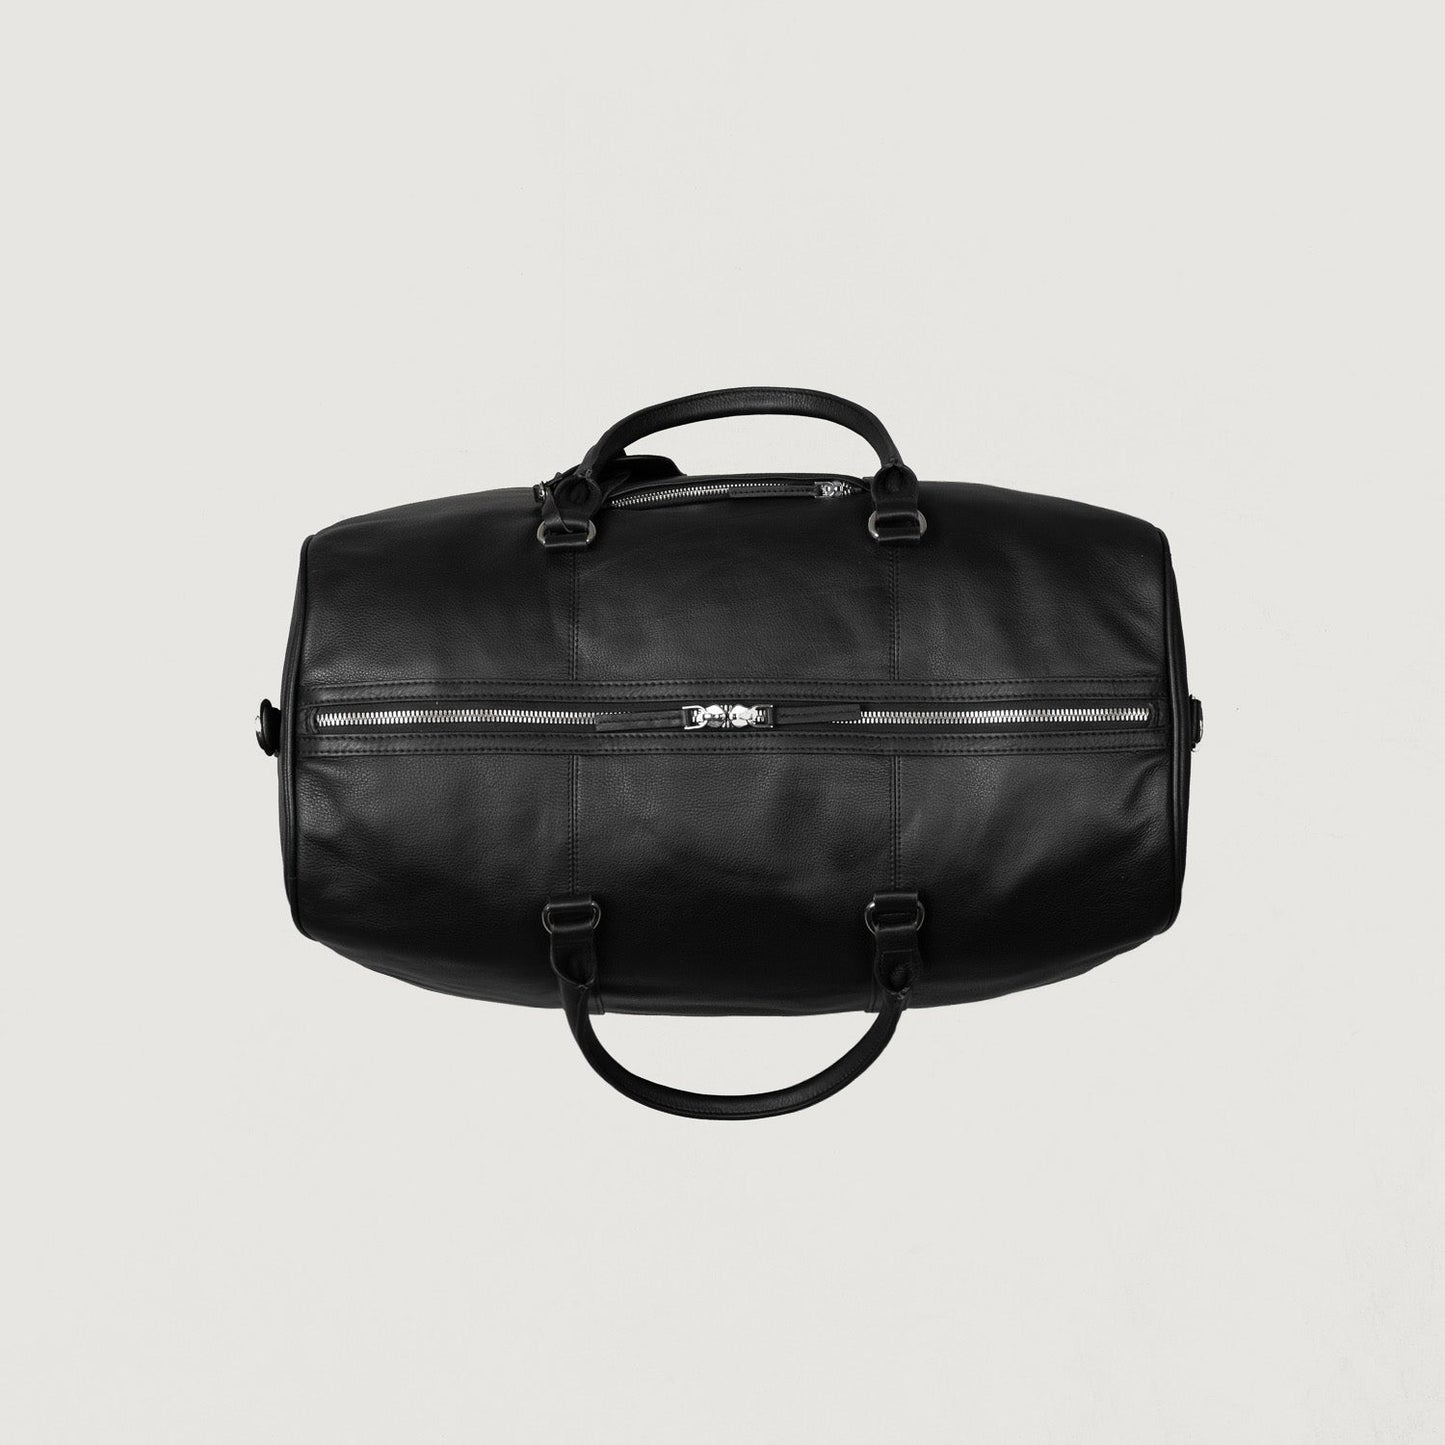 The Darrio Black Leather Duffle Bag